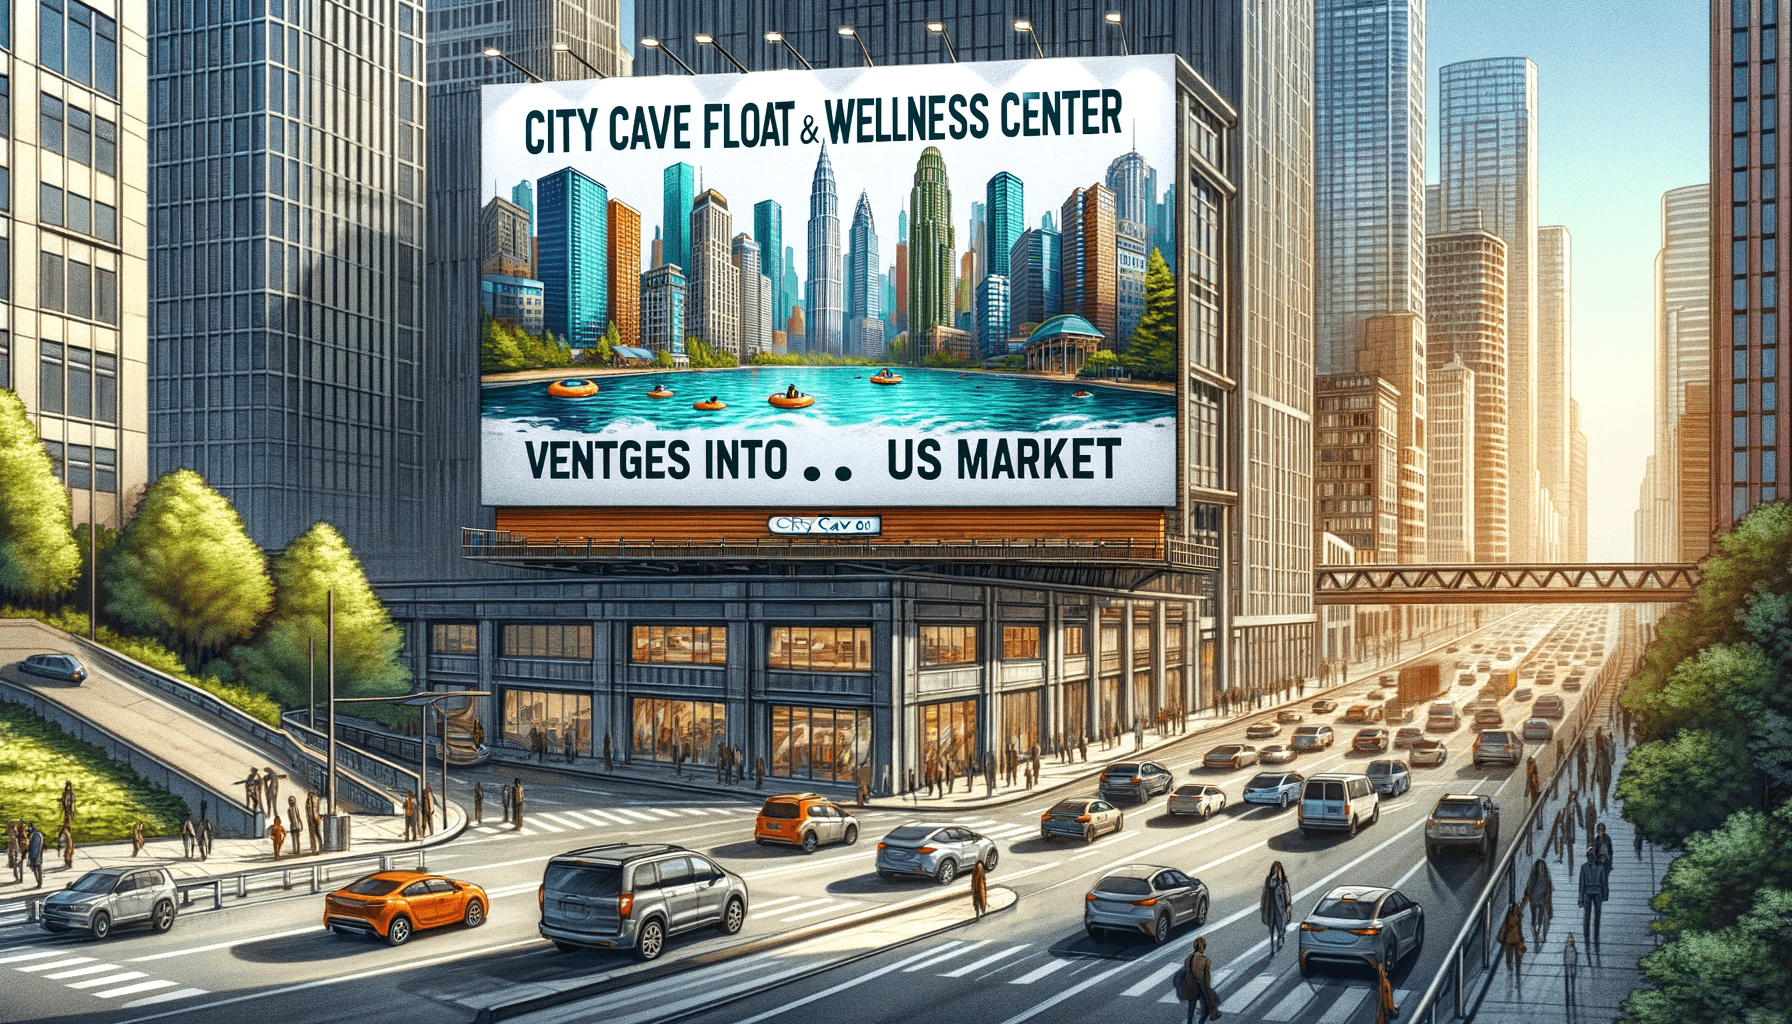 City Cave Float & Wellness Center ventures into US market